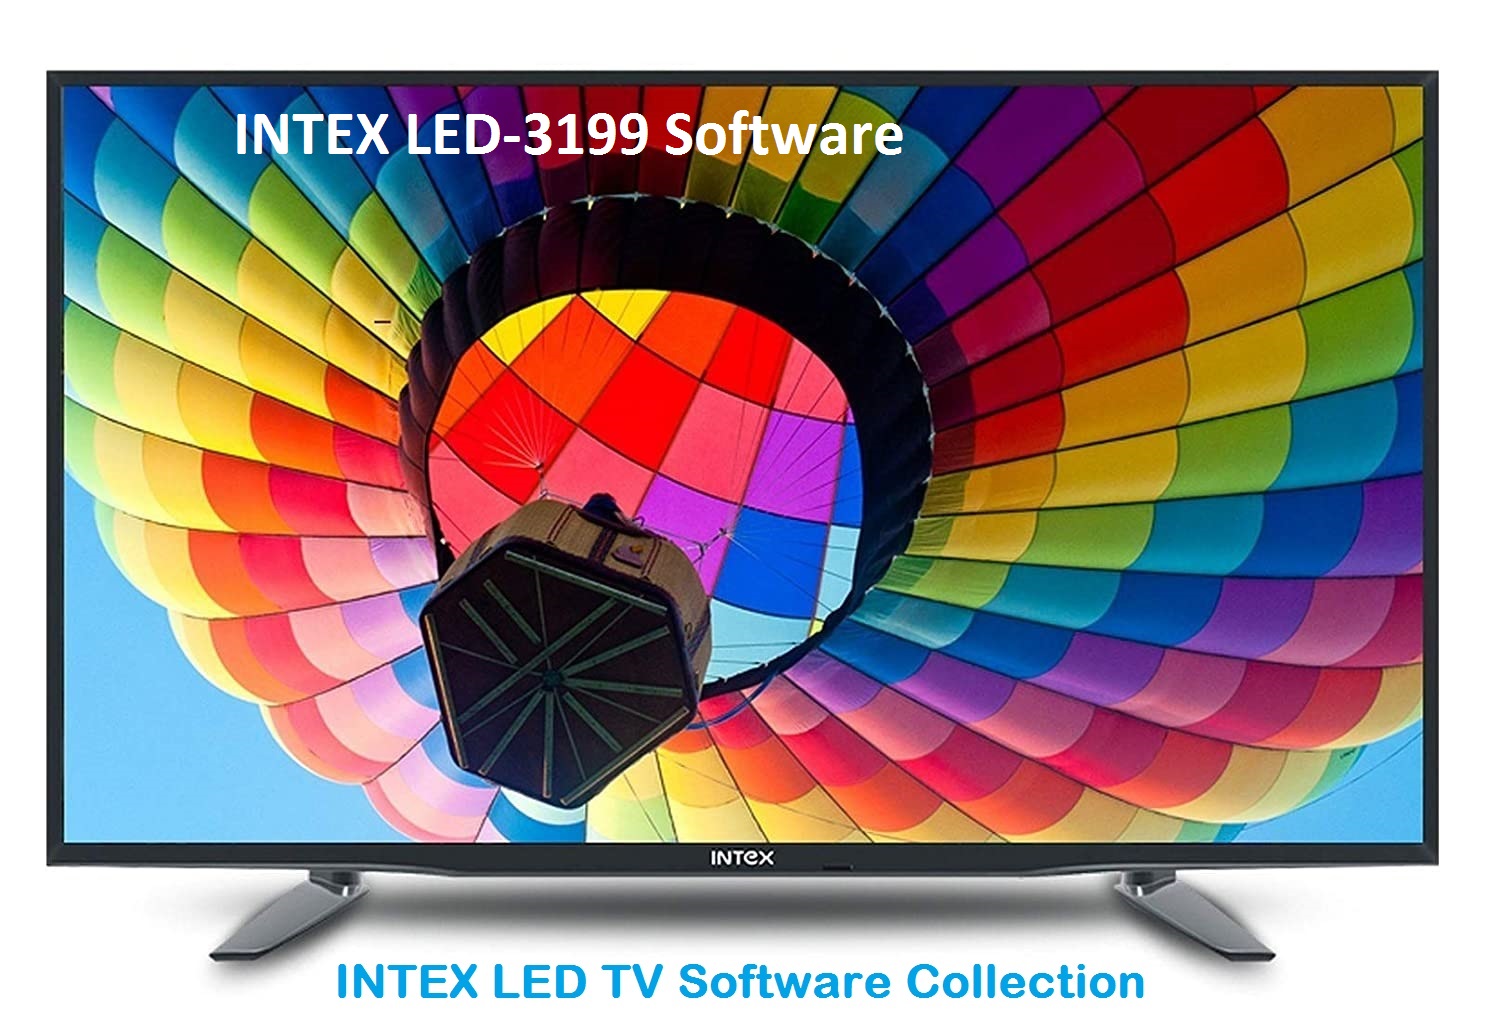 Intex Led-3199